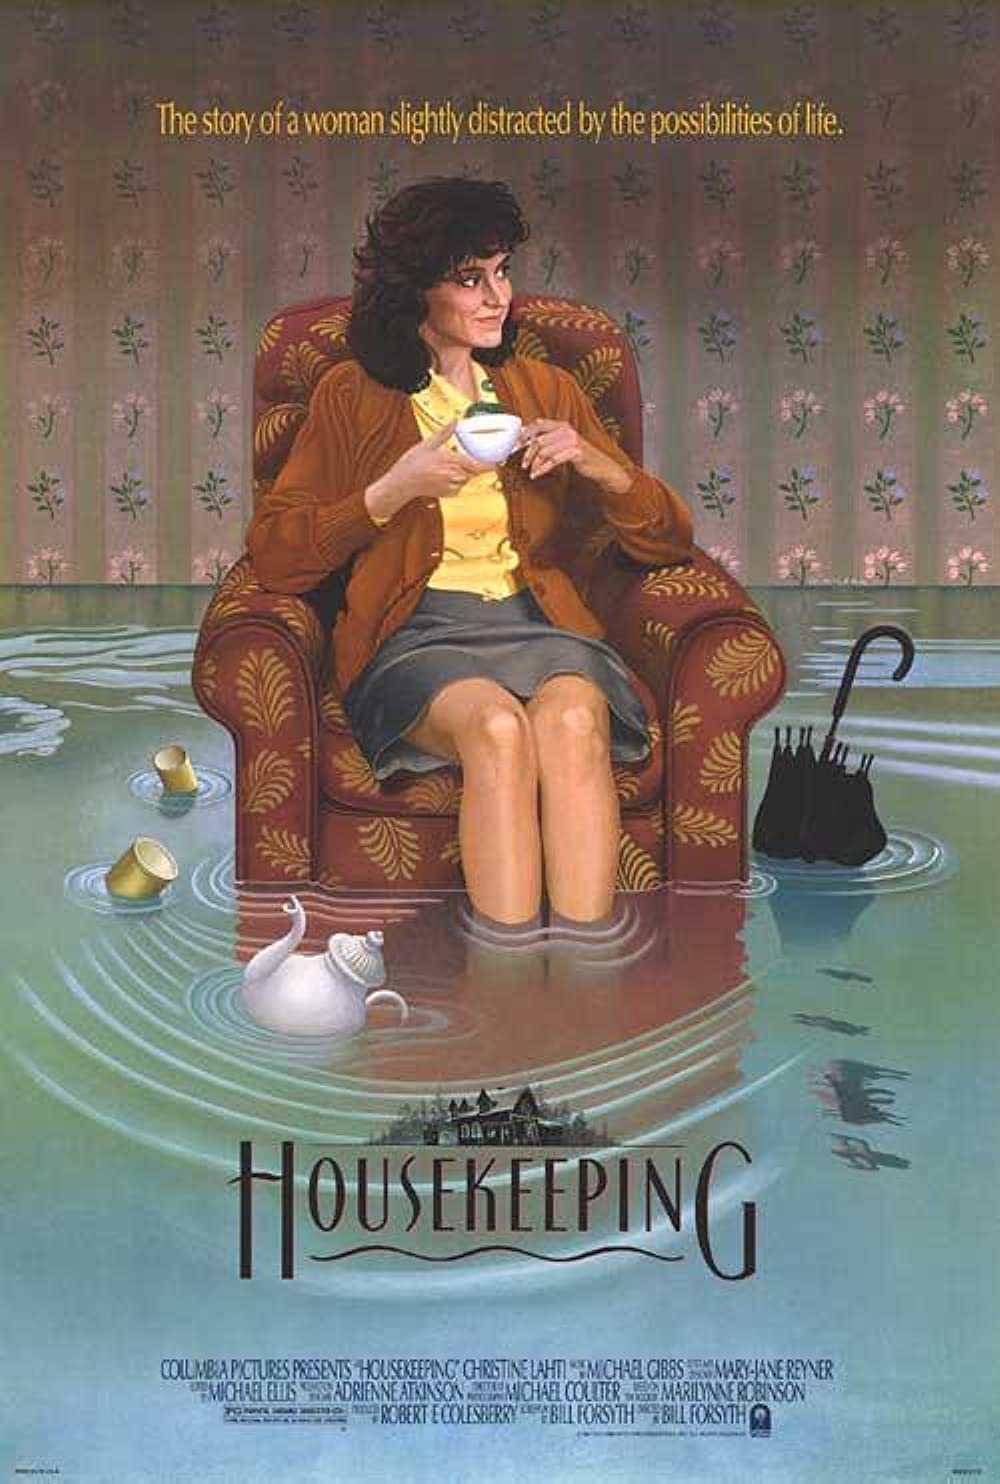 Filmbeschreibung zu Housekeeping